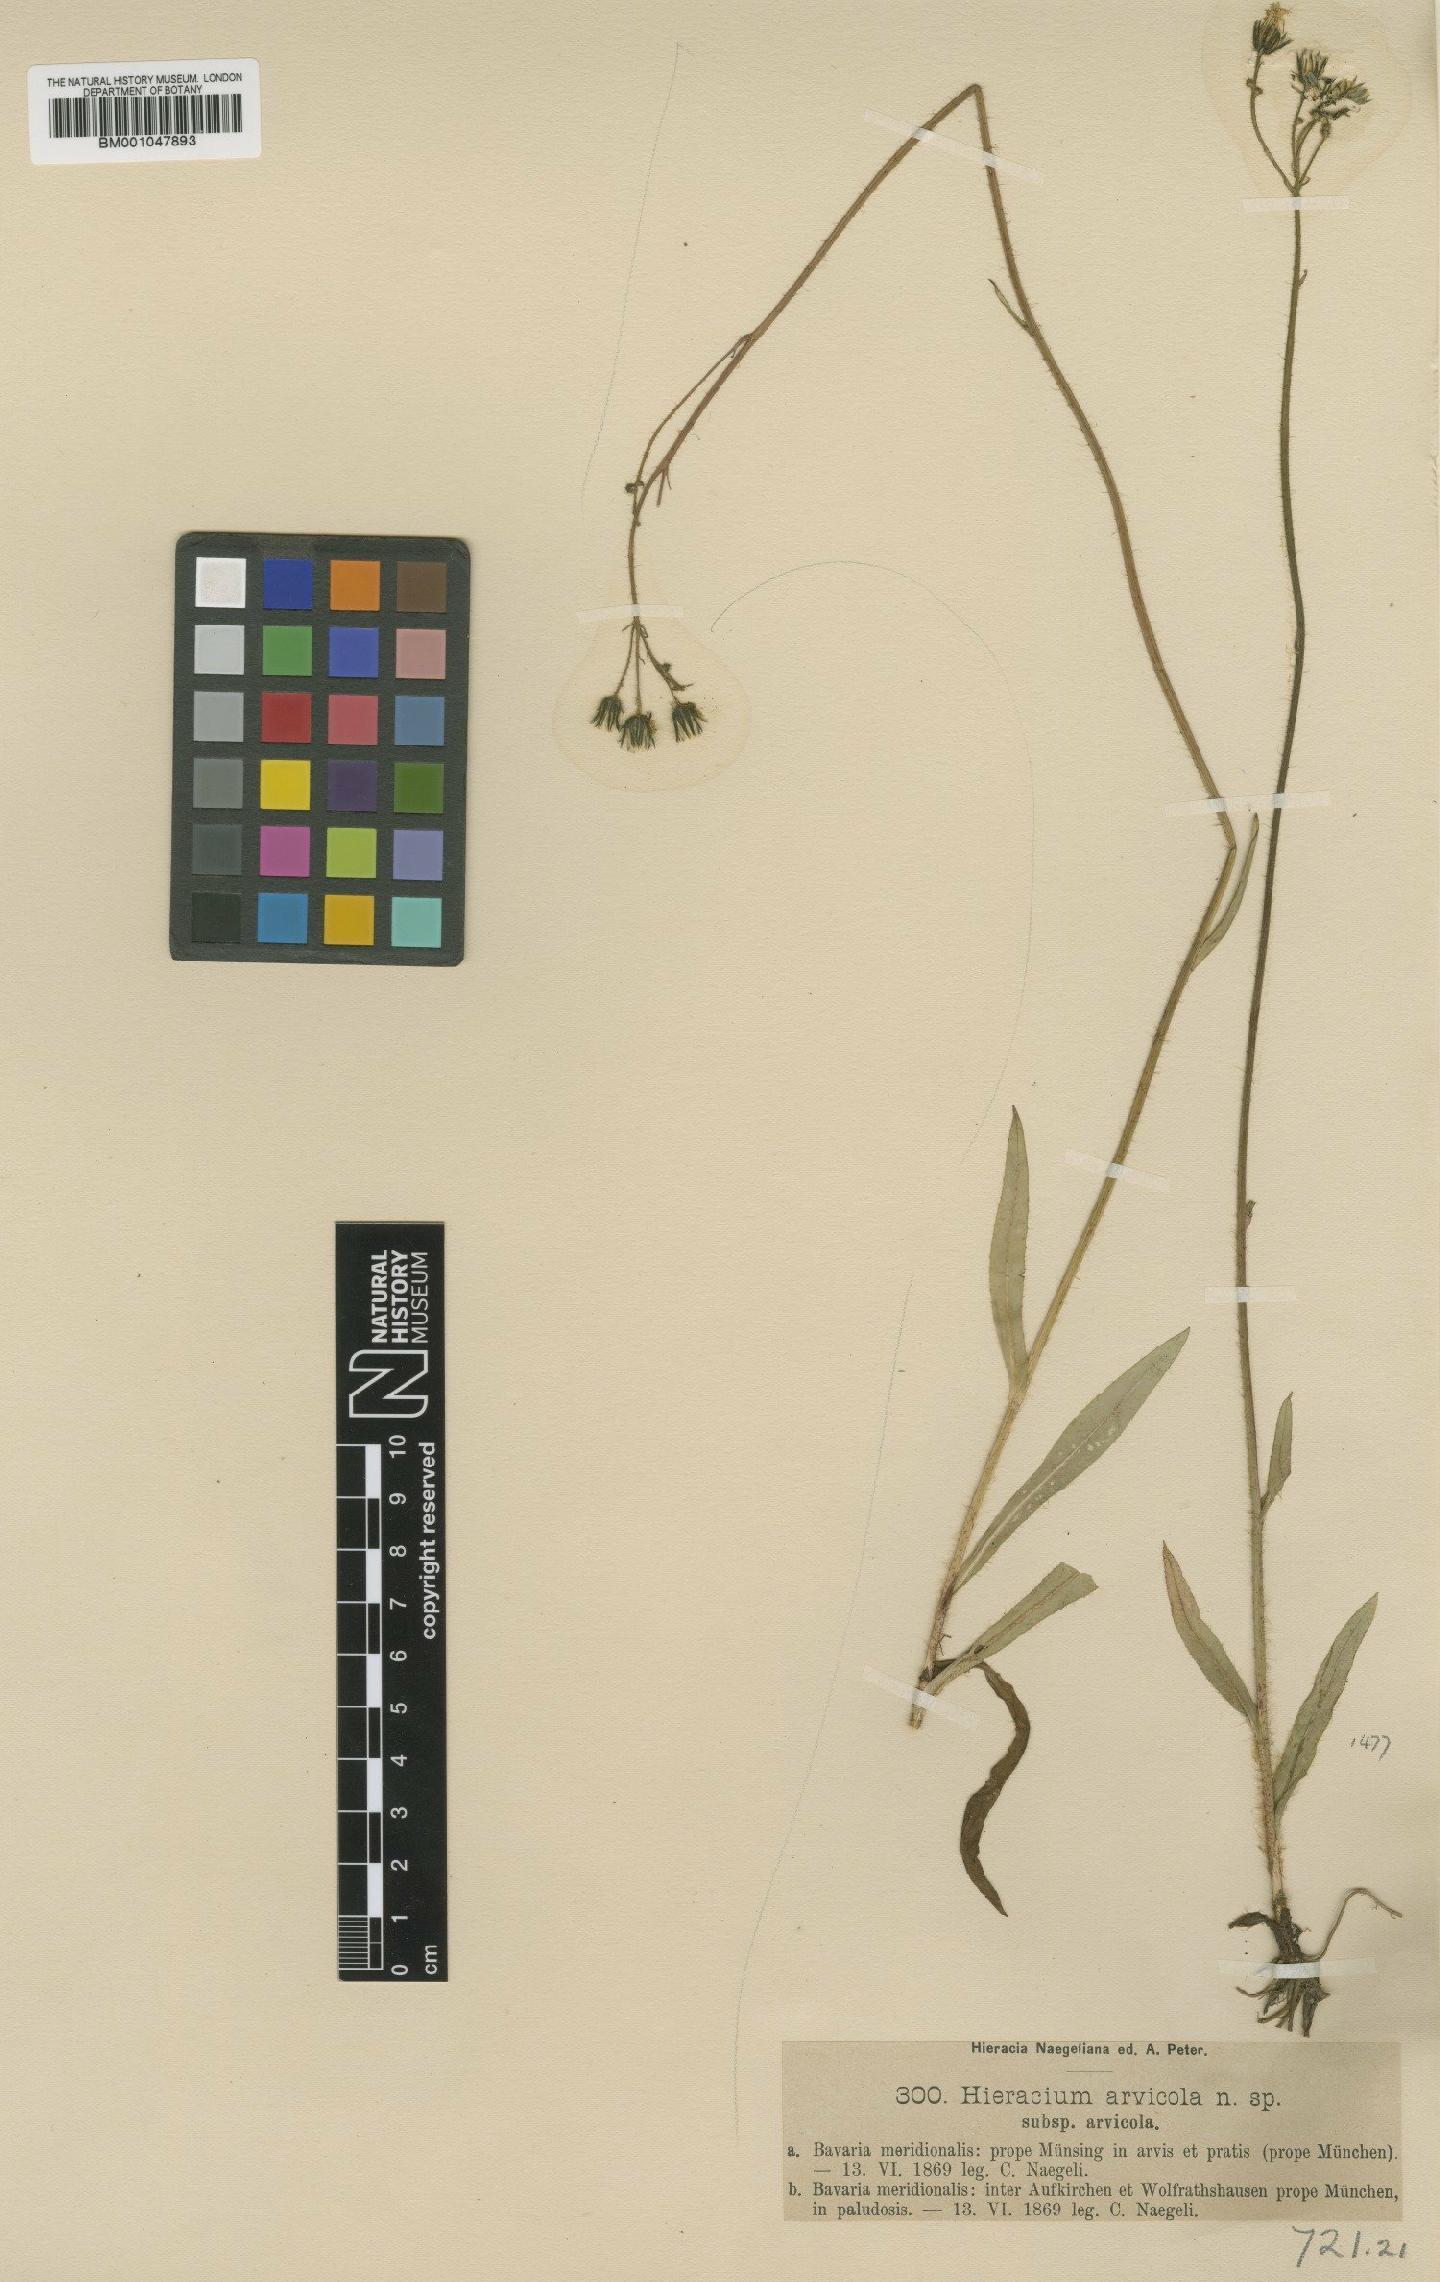 To NHMUK collection (Hieracium arvicola Nägeli & Peter; Type; NHMUK:ecatalogue:2817758)